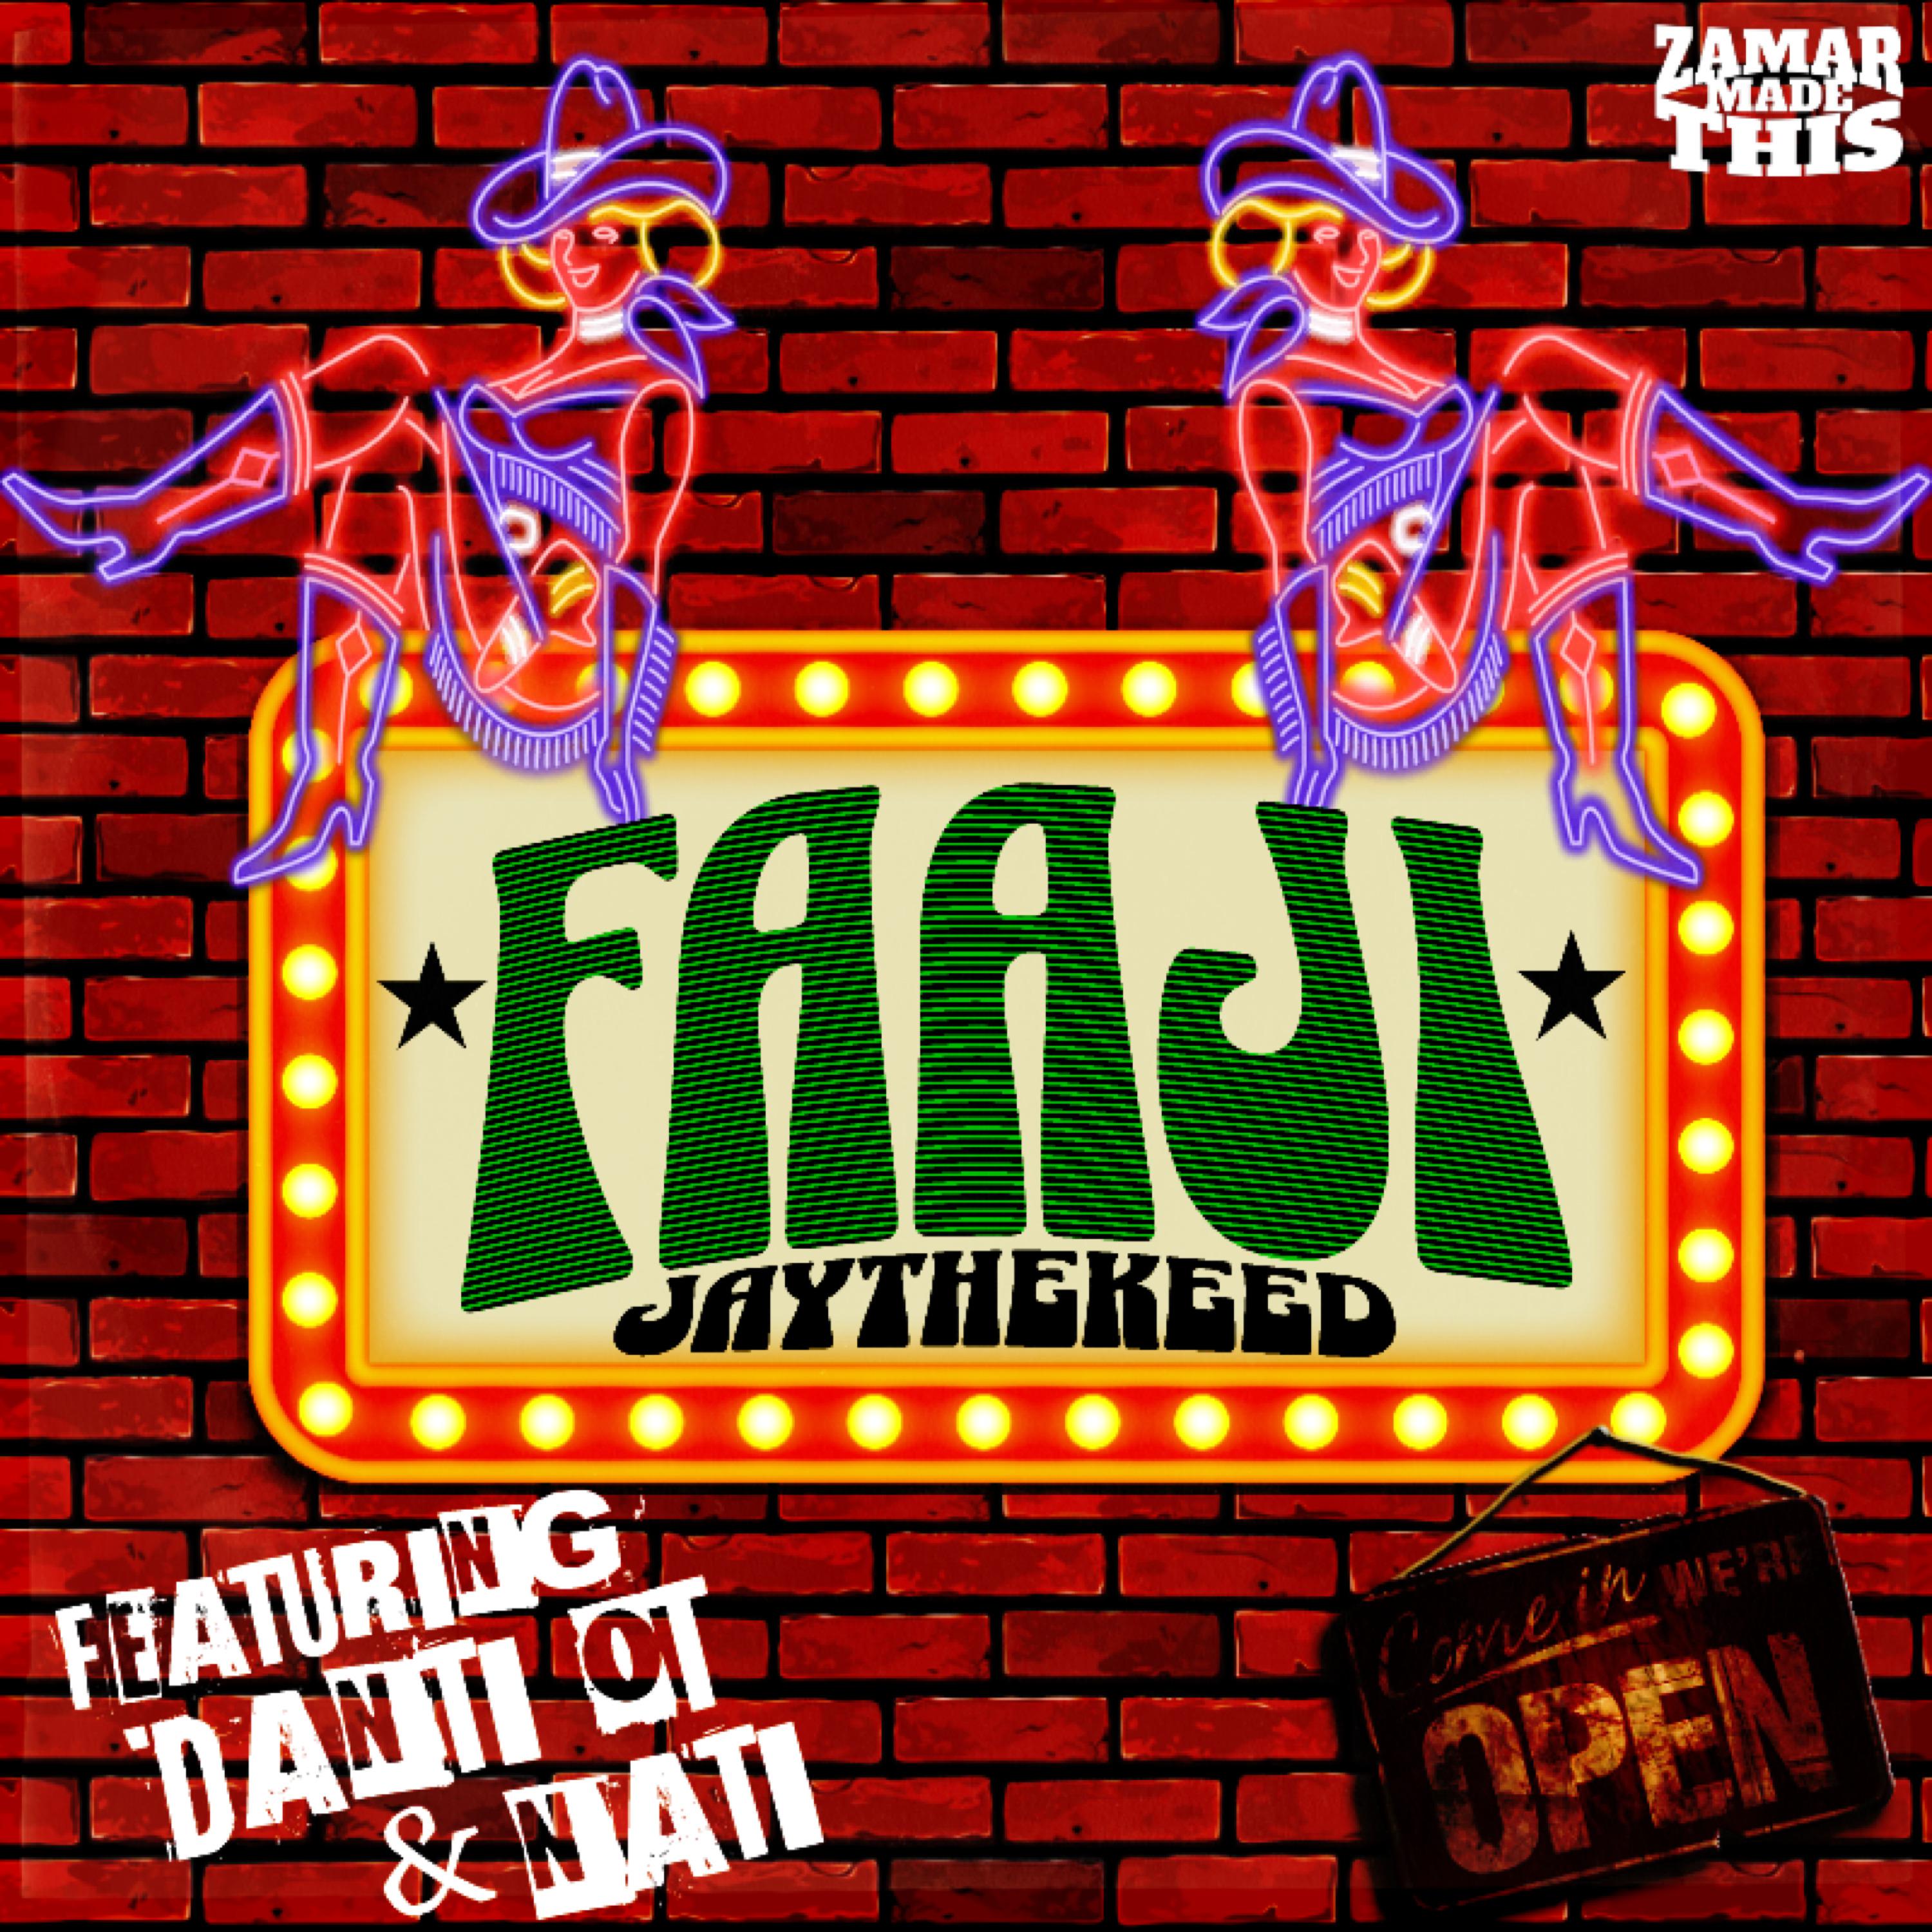 Постер альбома Faaji